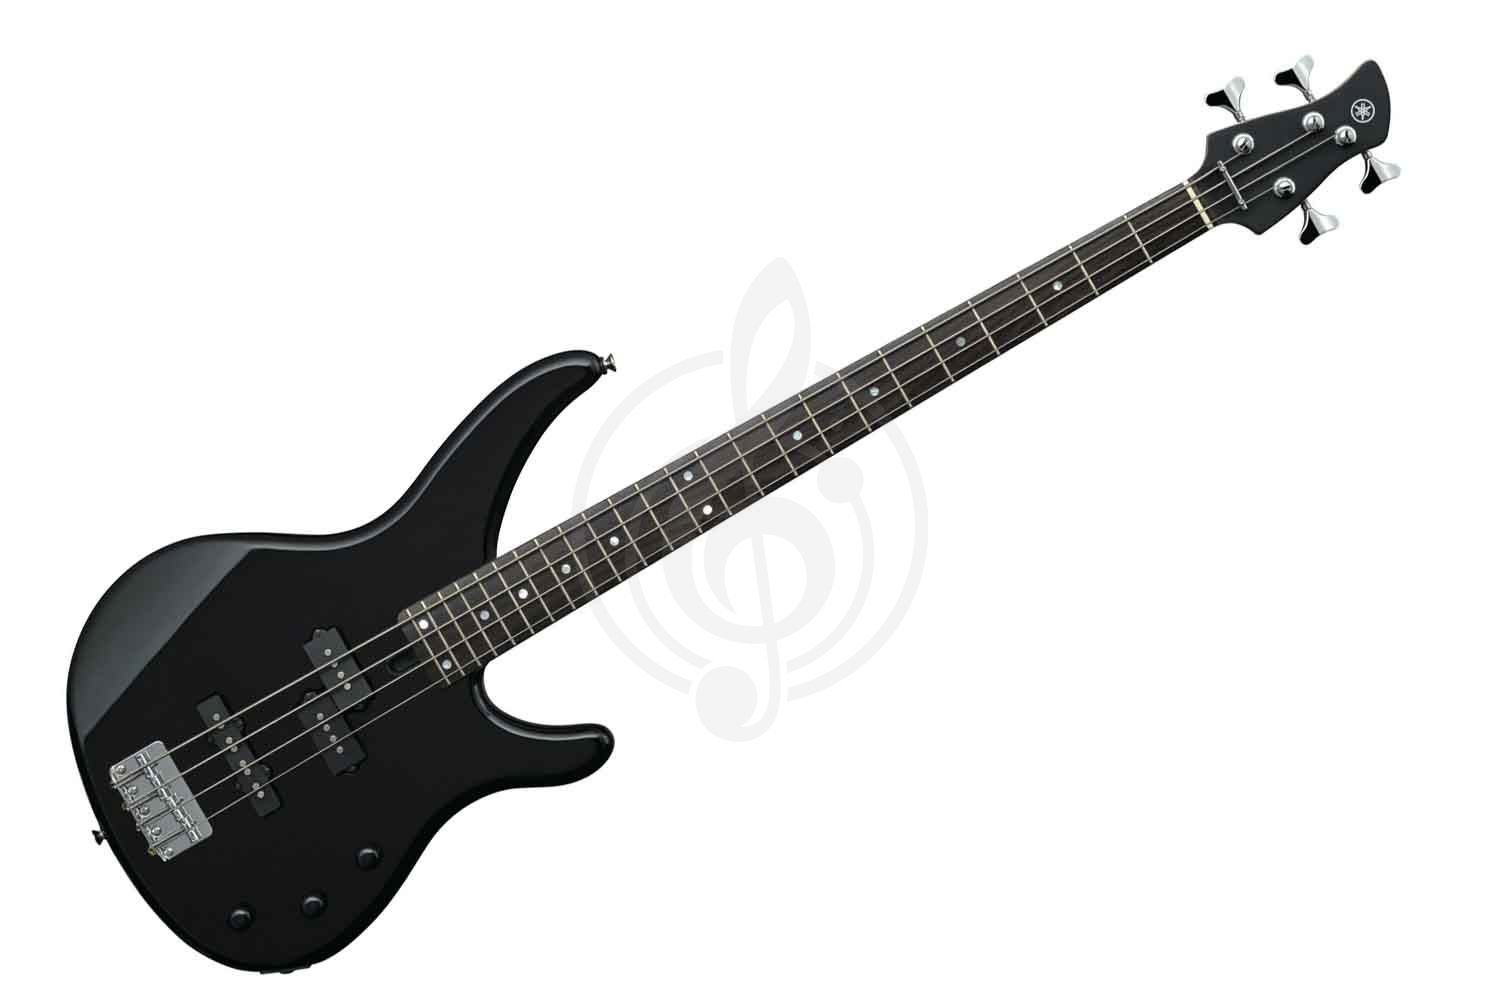 Бас-гитара Бас-гитары Yamaha Yamaha TRBX174 BL Бас-гитара, цвет черный TRBX174 BLACK - фото 1